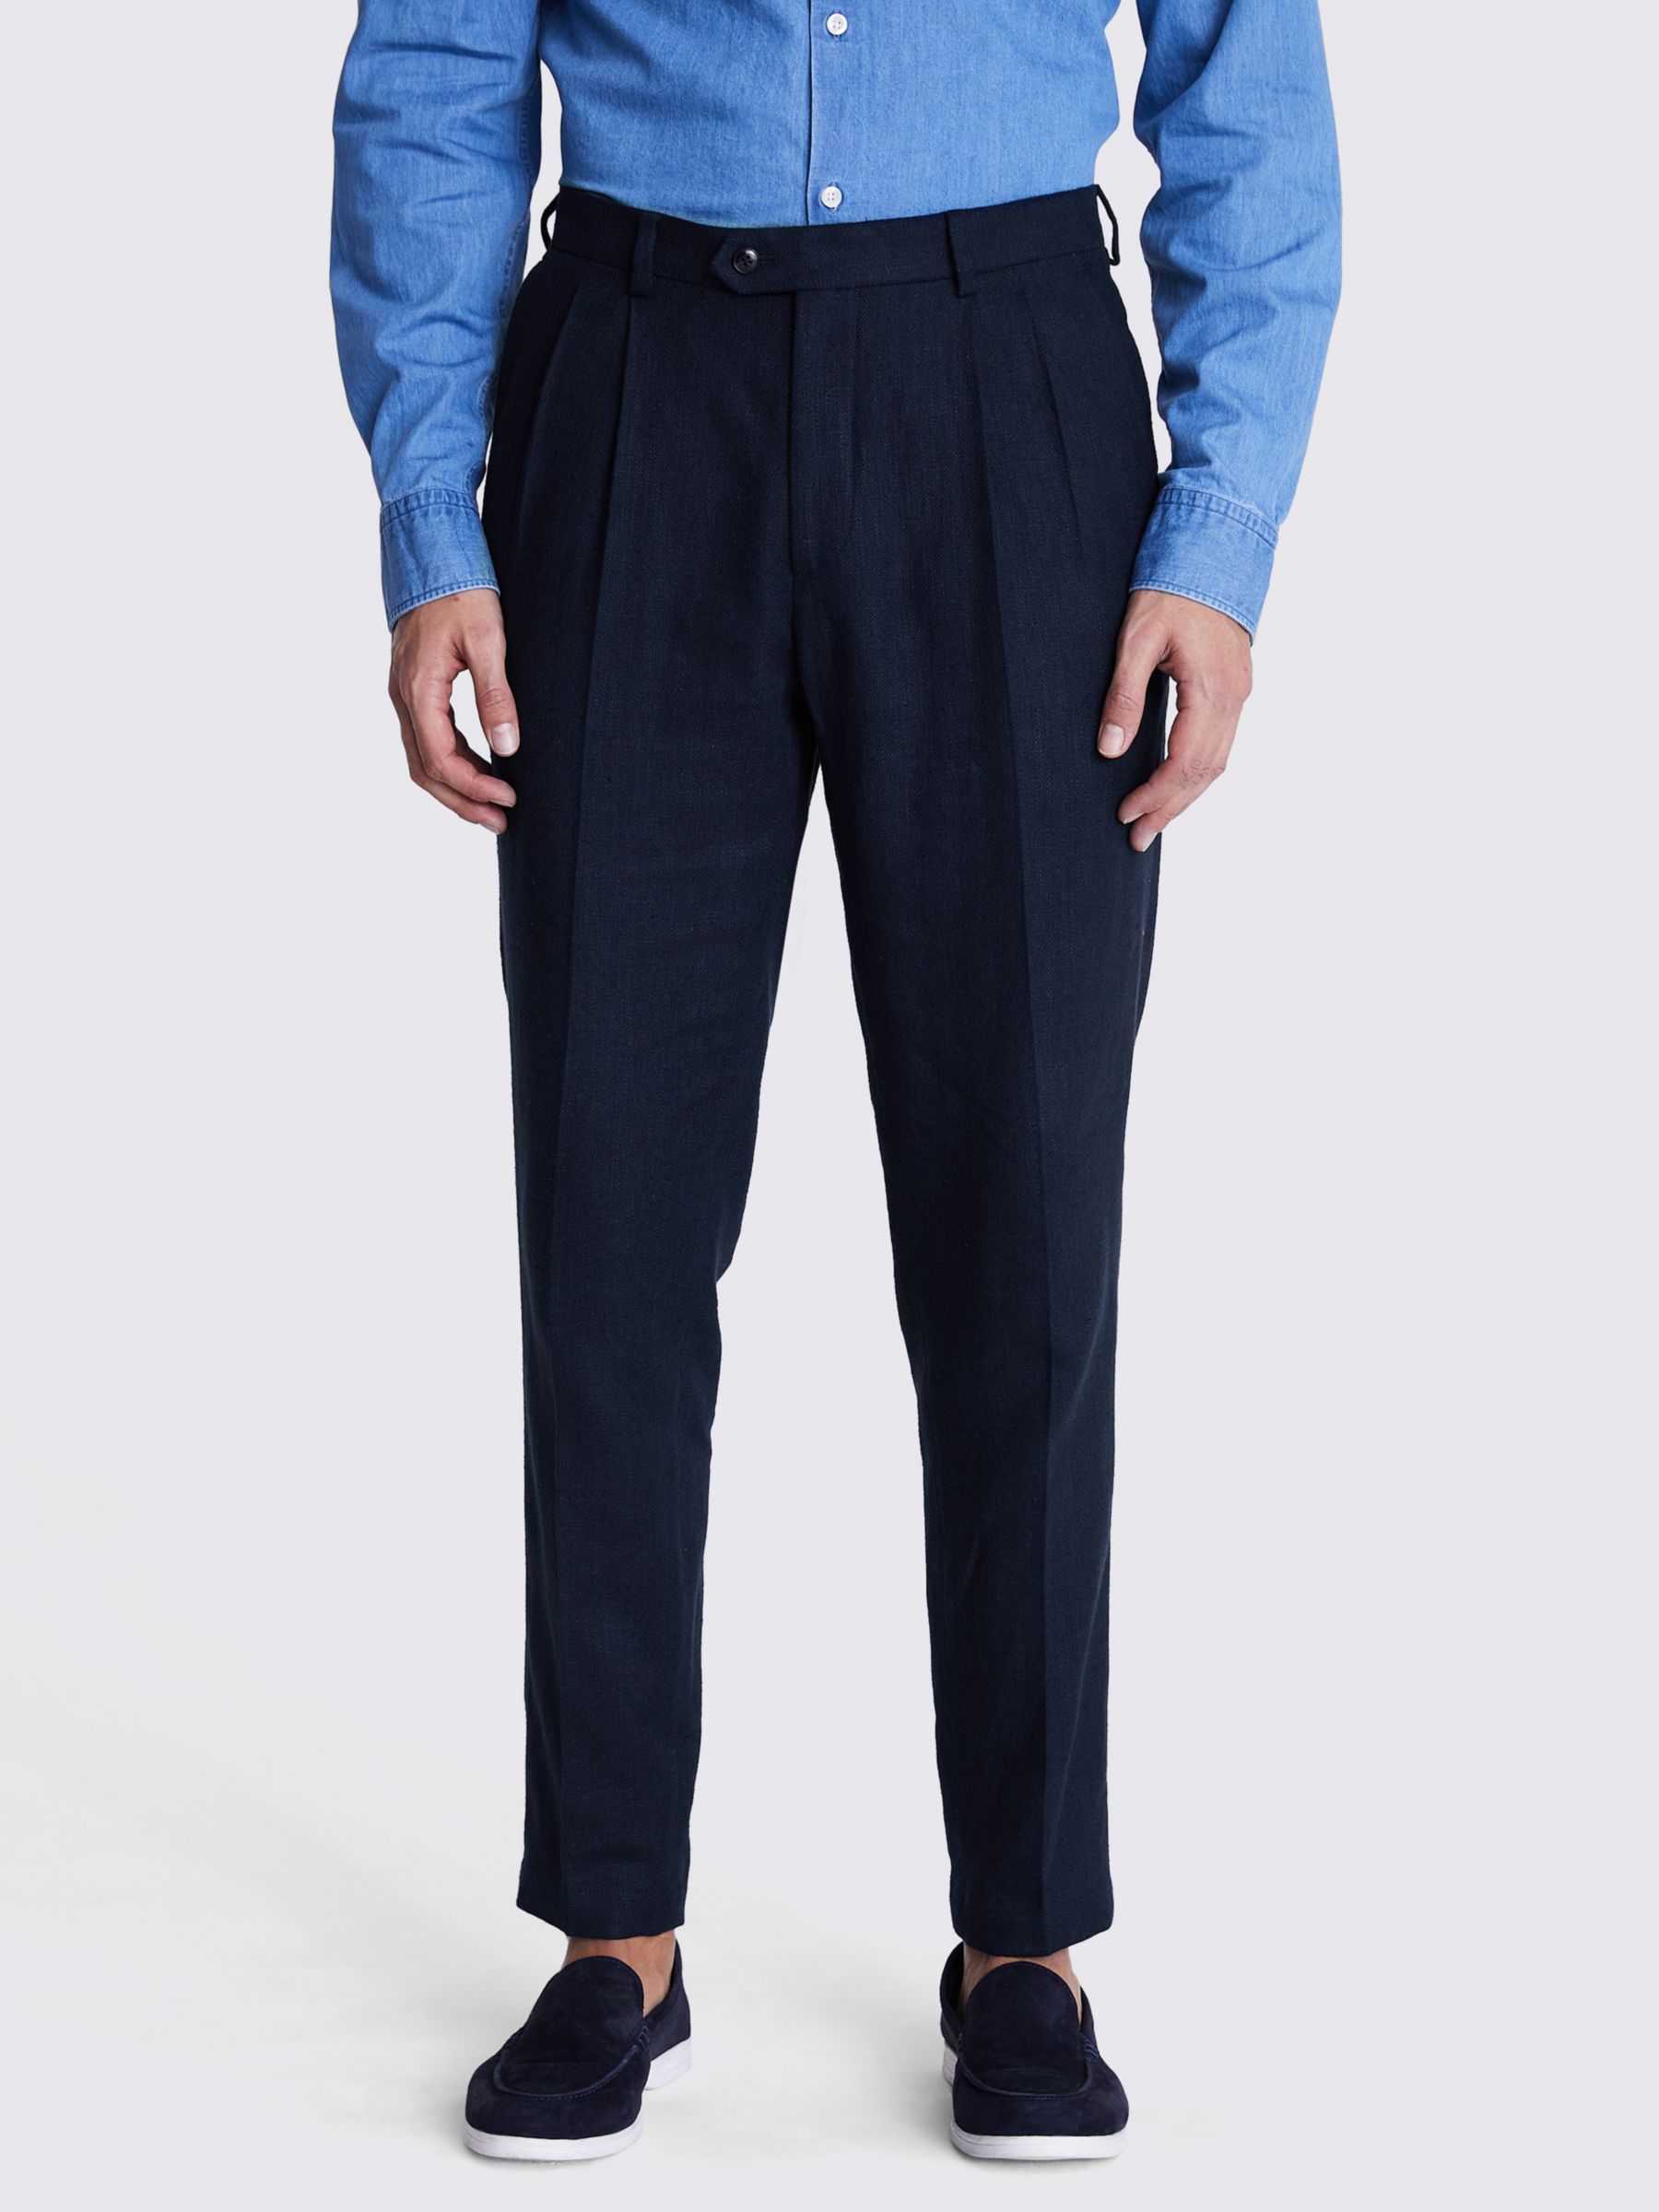 Moss Tailored Fit Herringbone Trousers, Navy, 30R